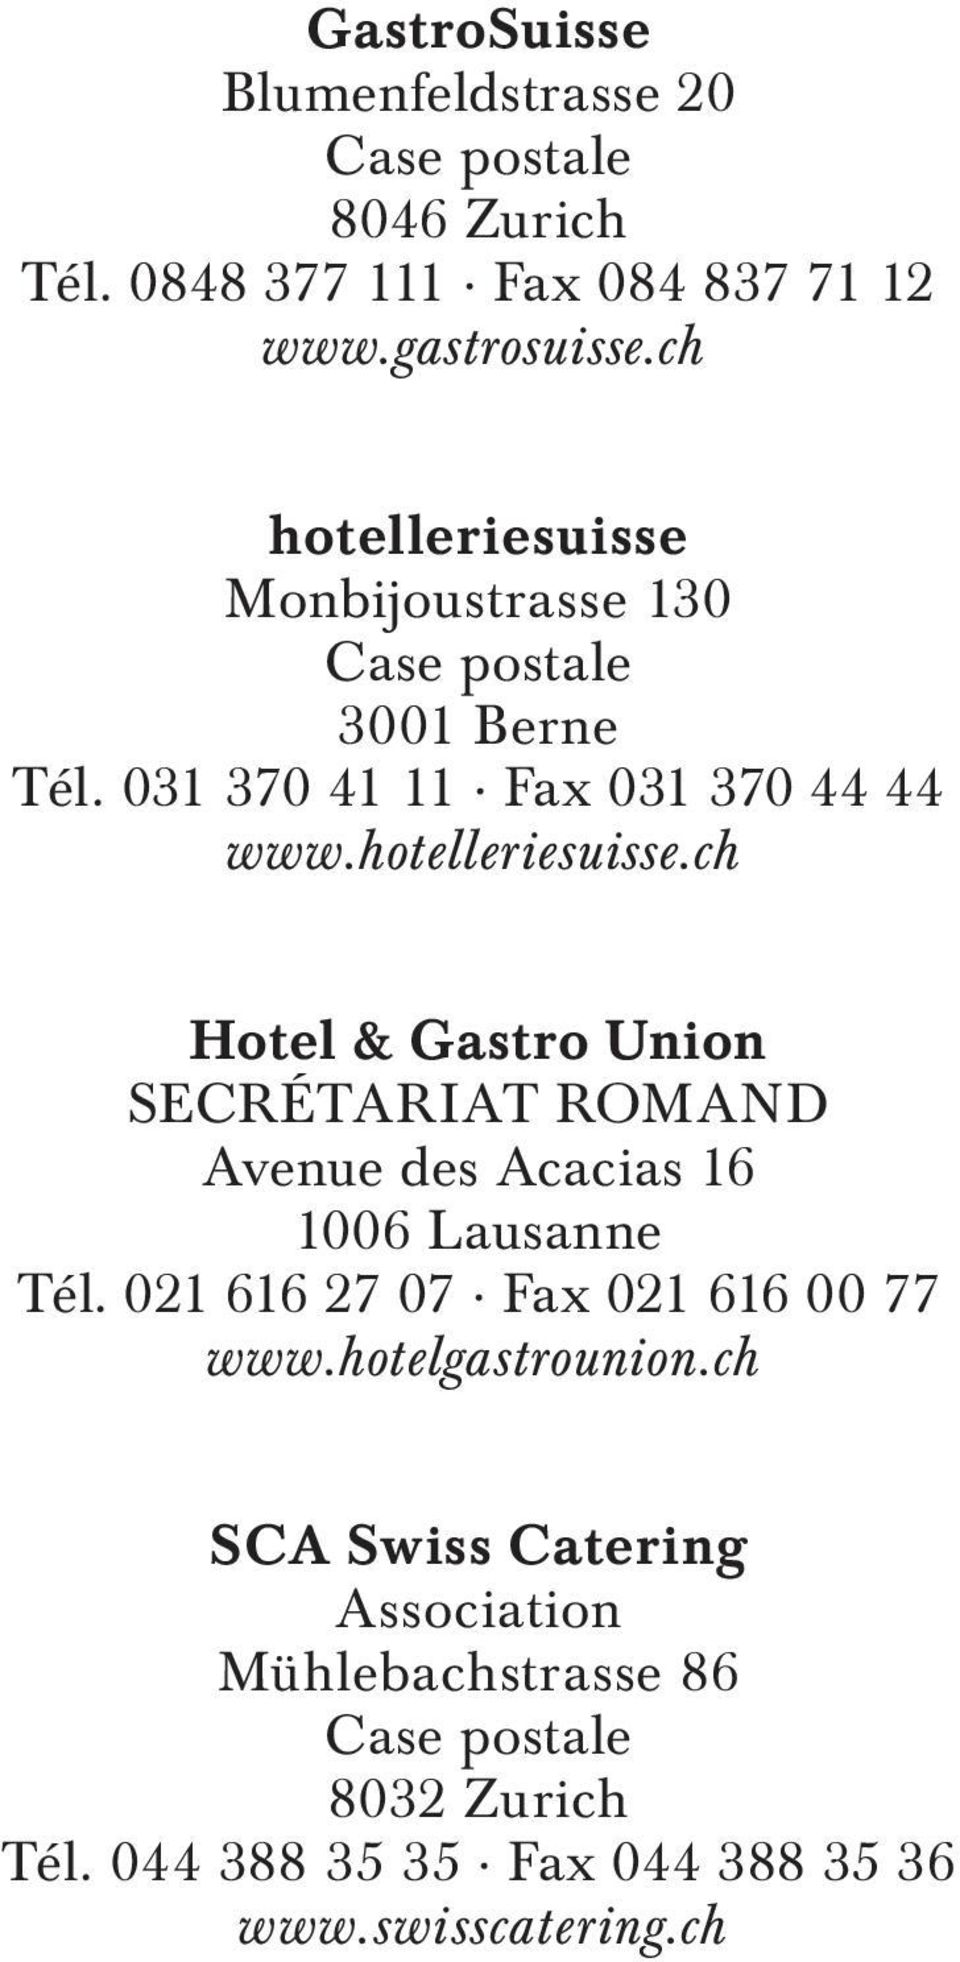 021 616 27 07 Fax 021 616 00 77 www.hotelgastrounion.